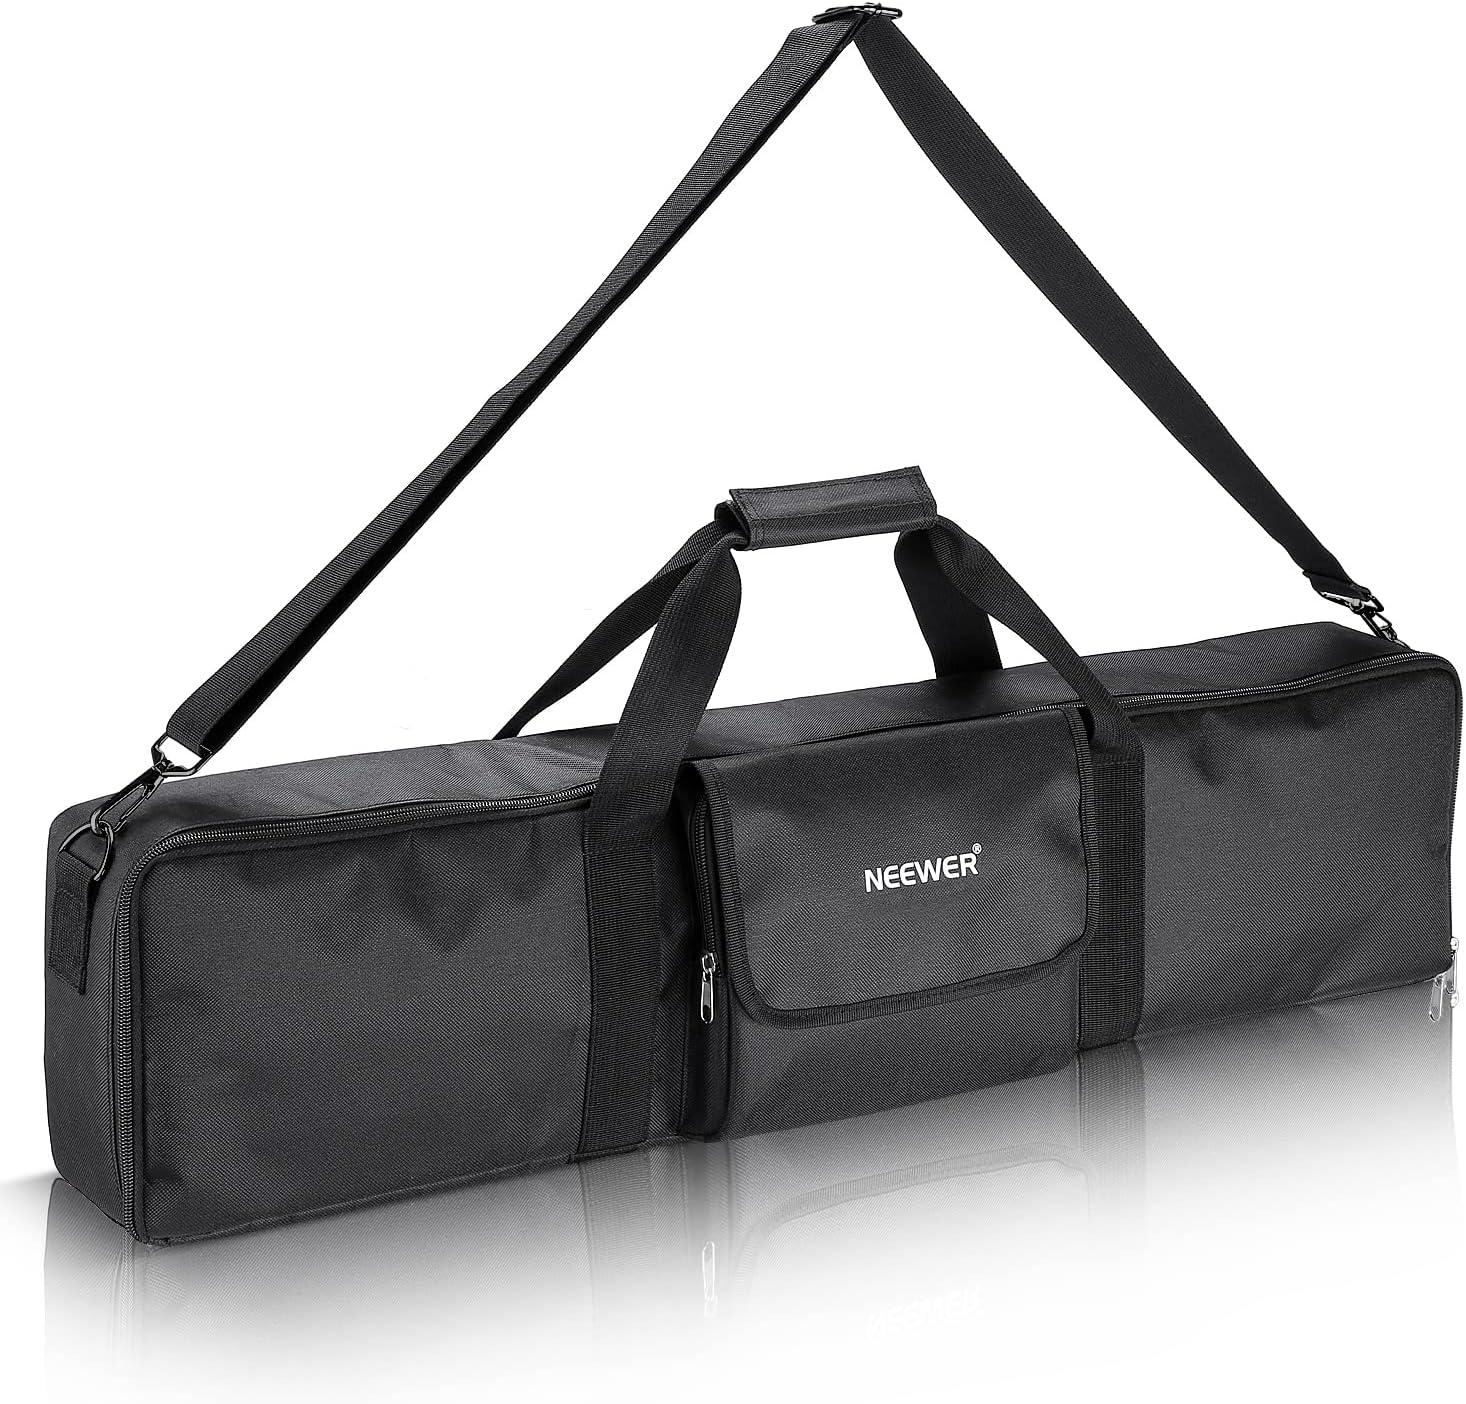 NEEWER PB7 Carrying Bag For Strobe Flash/Video Light - NEEWER